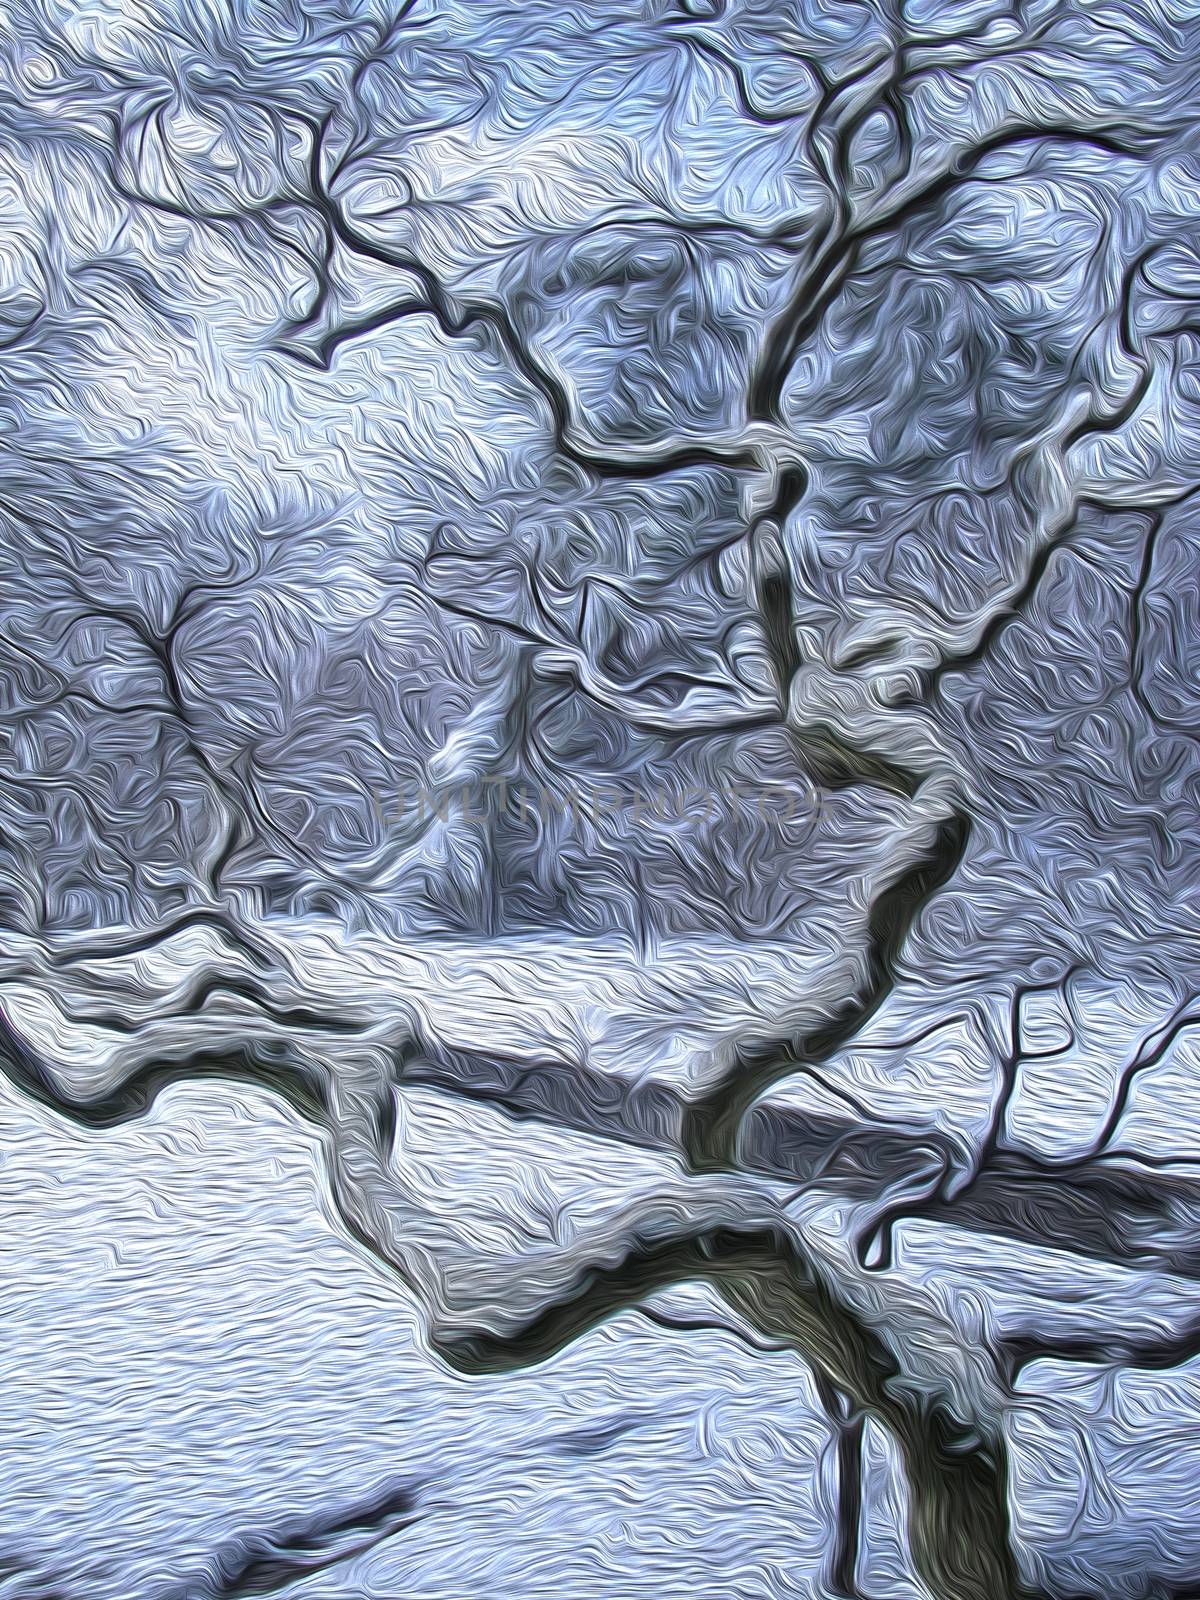 Winter park. Snow on a tree branch.